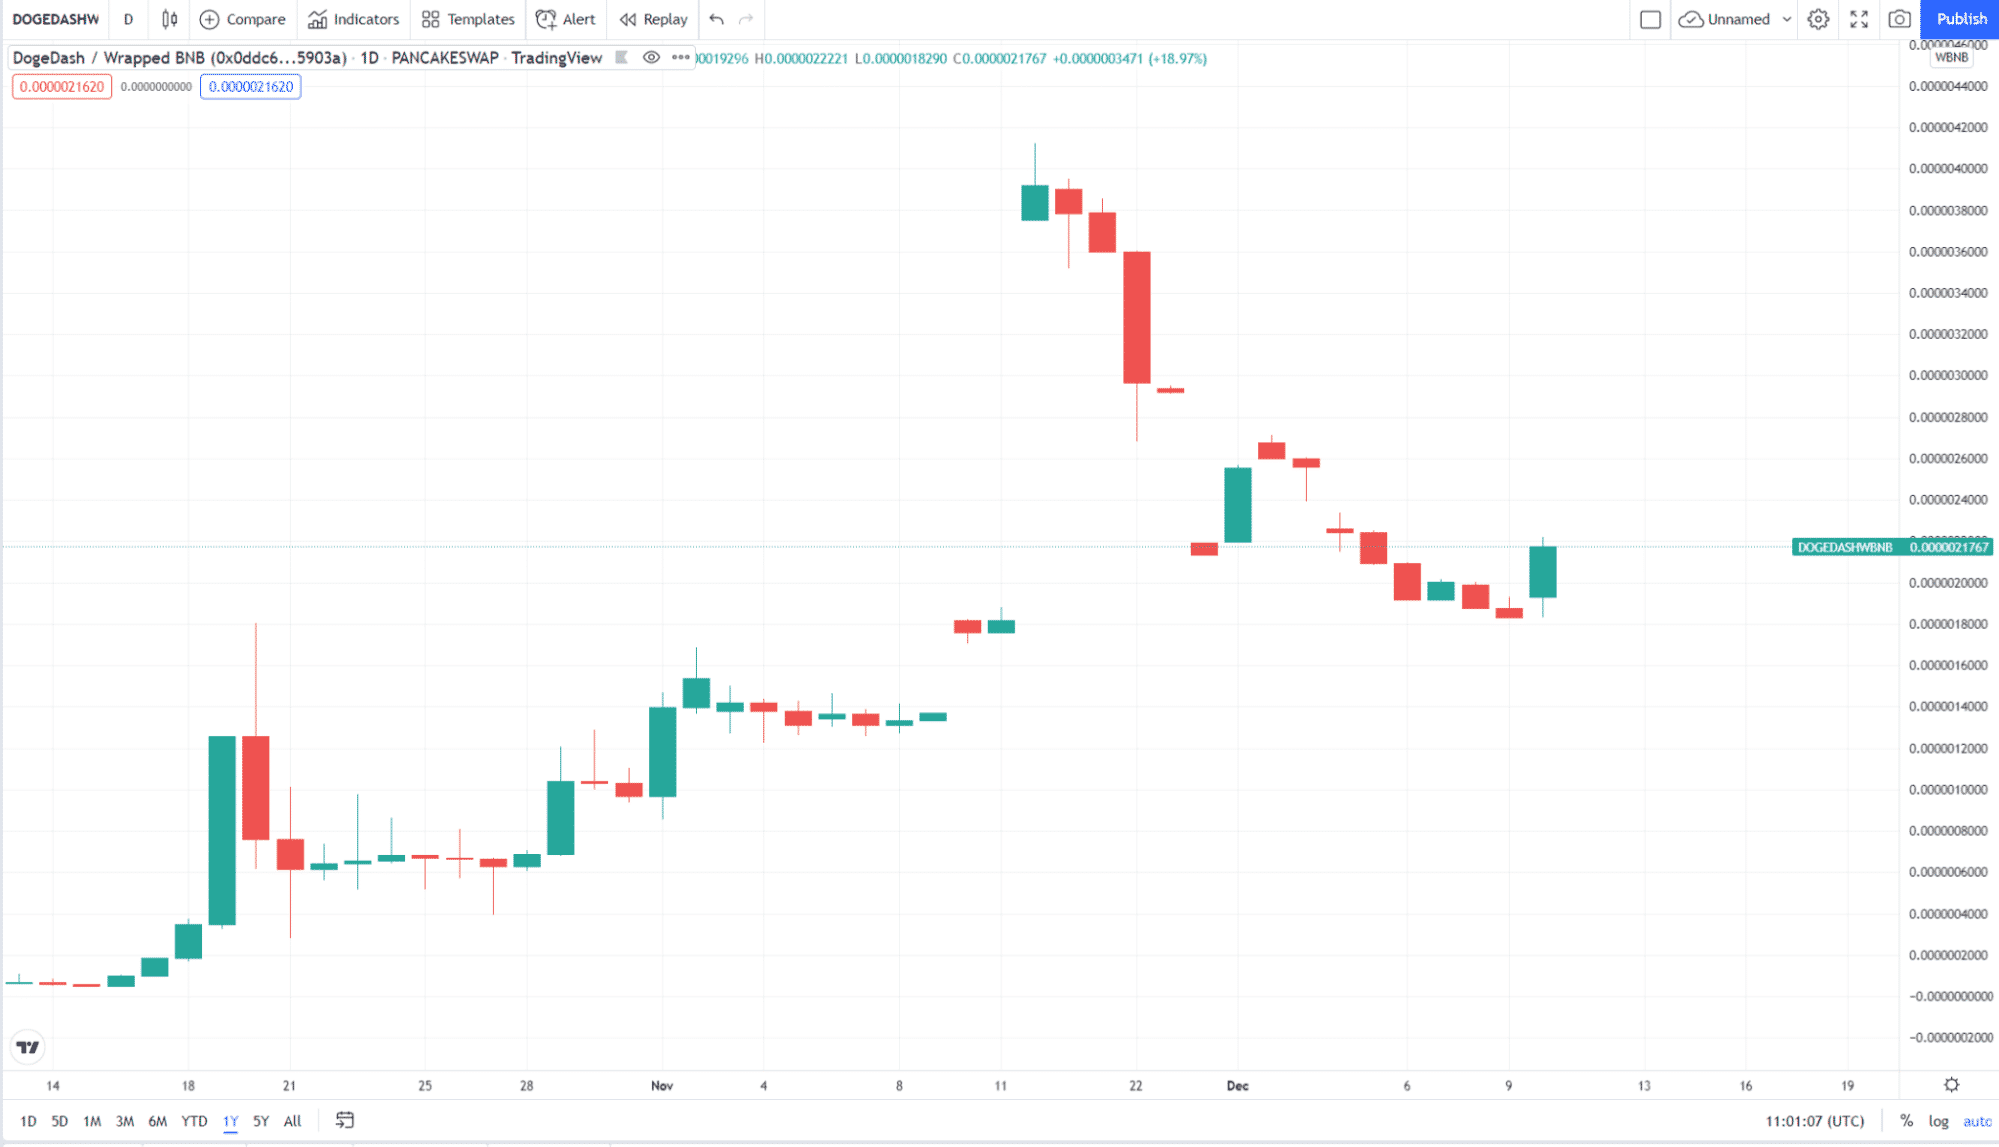 DOGE DASH/USD price chart 